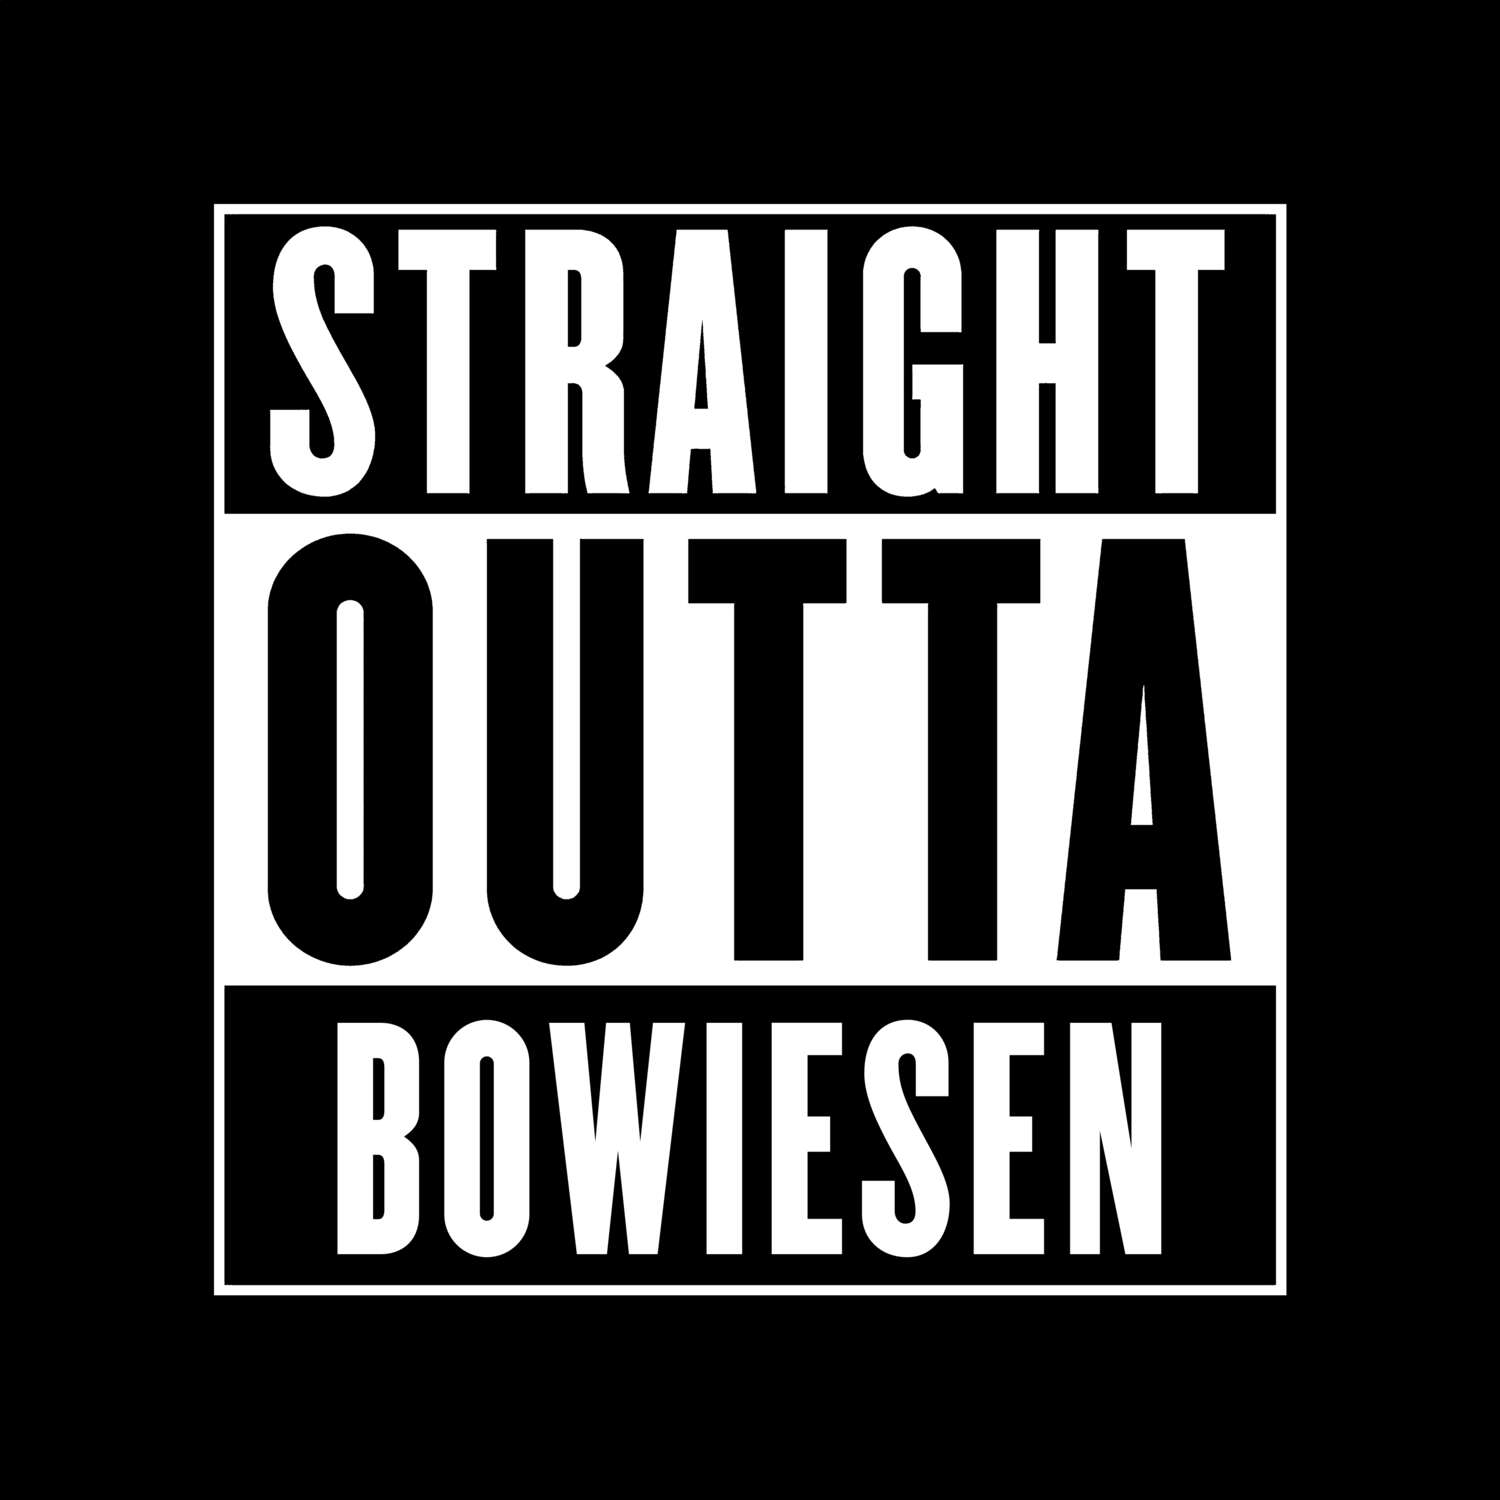 Bowiesen T-Shirt »Straight Outta«